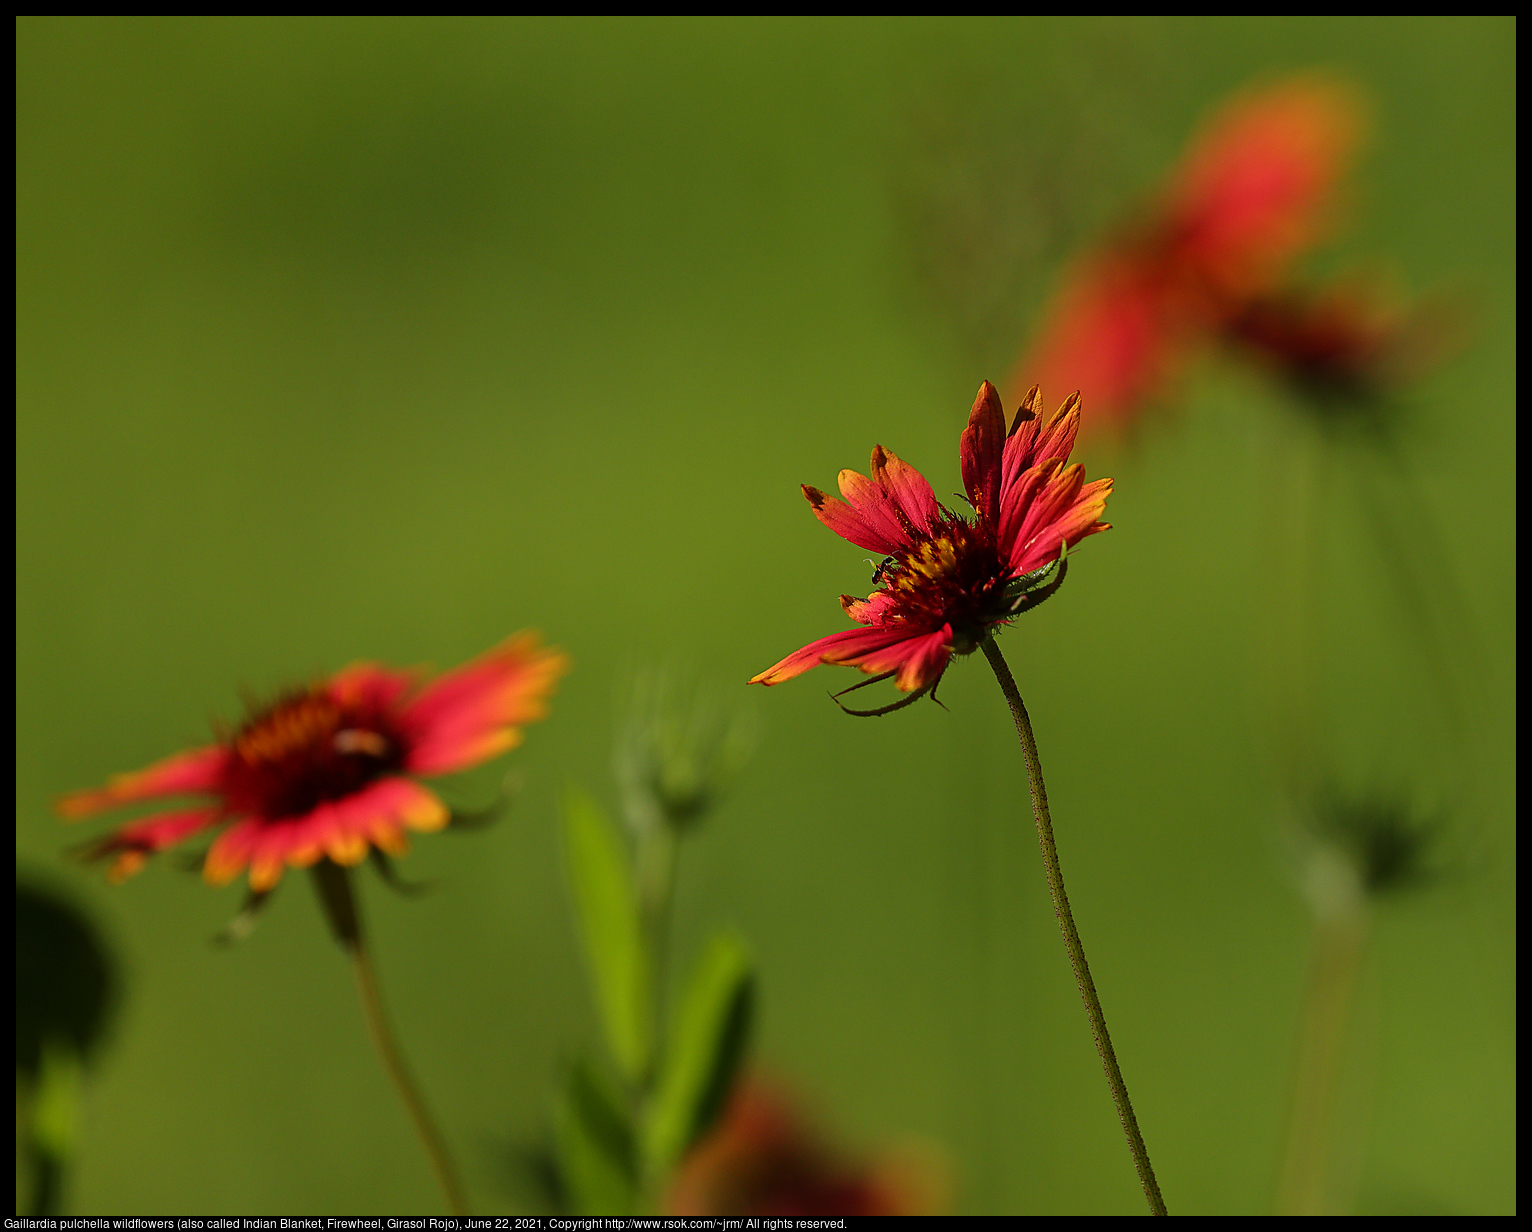 Gaillardia pulchella wildflowers (also called Indian Blanket, Firewheel, Girasol Rojo), June 22, 2021